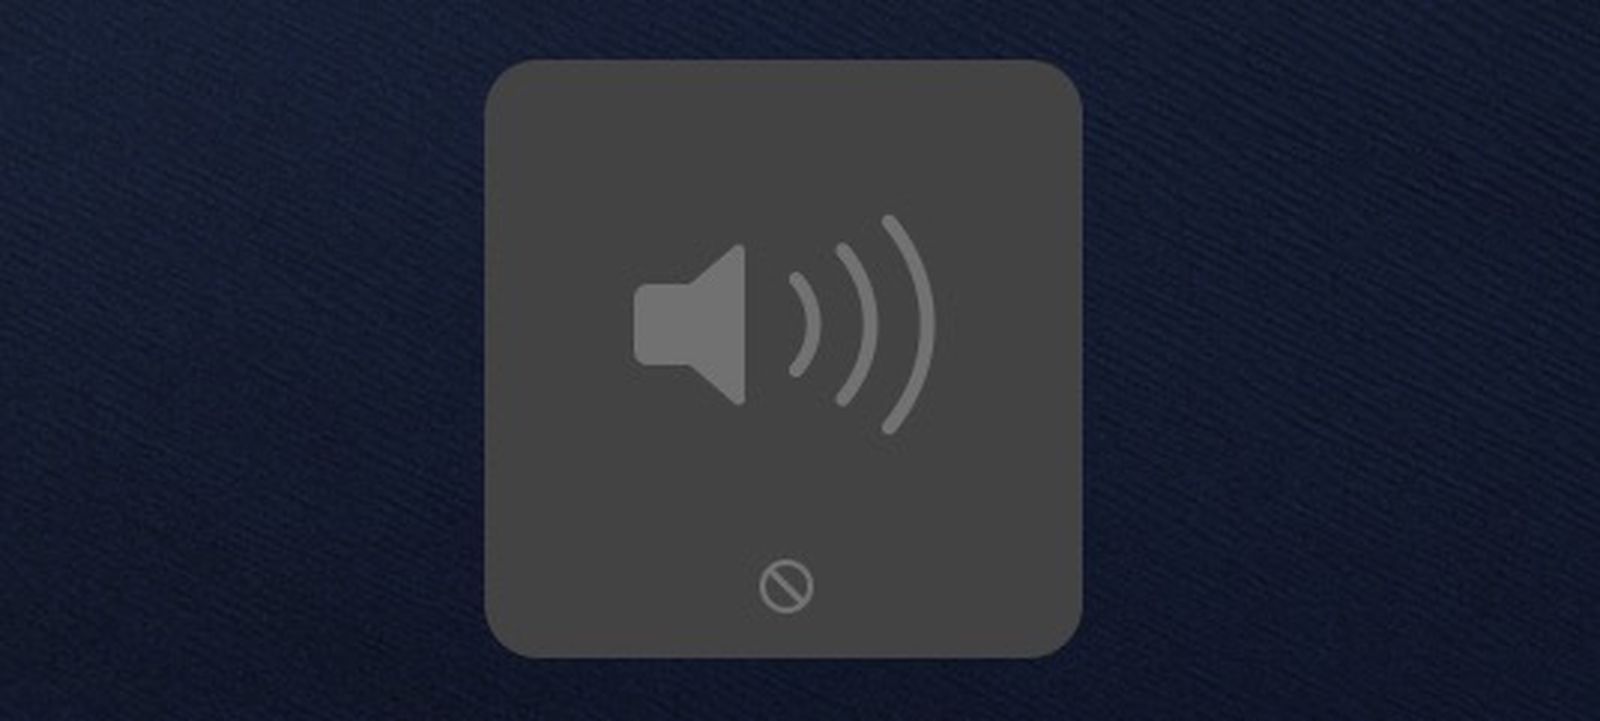 disable mac media keys for headphones